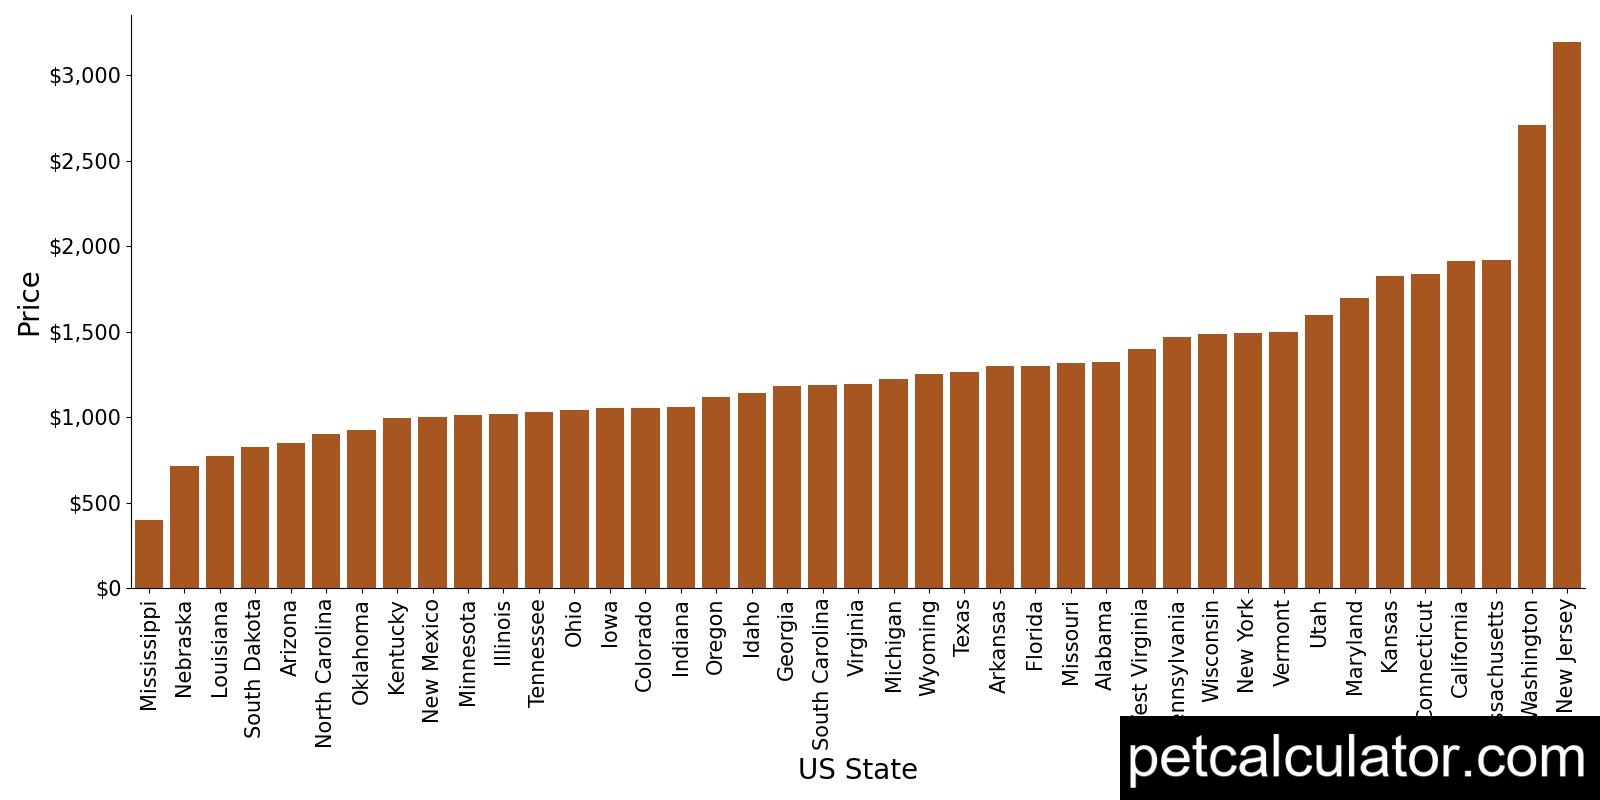 Price of Labrador Retriever by US State 